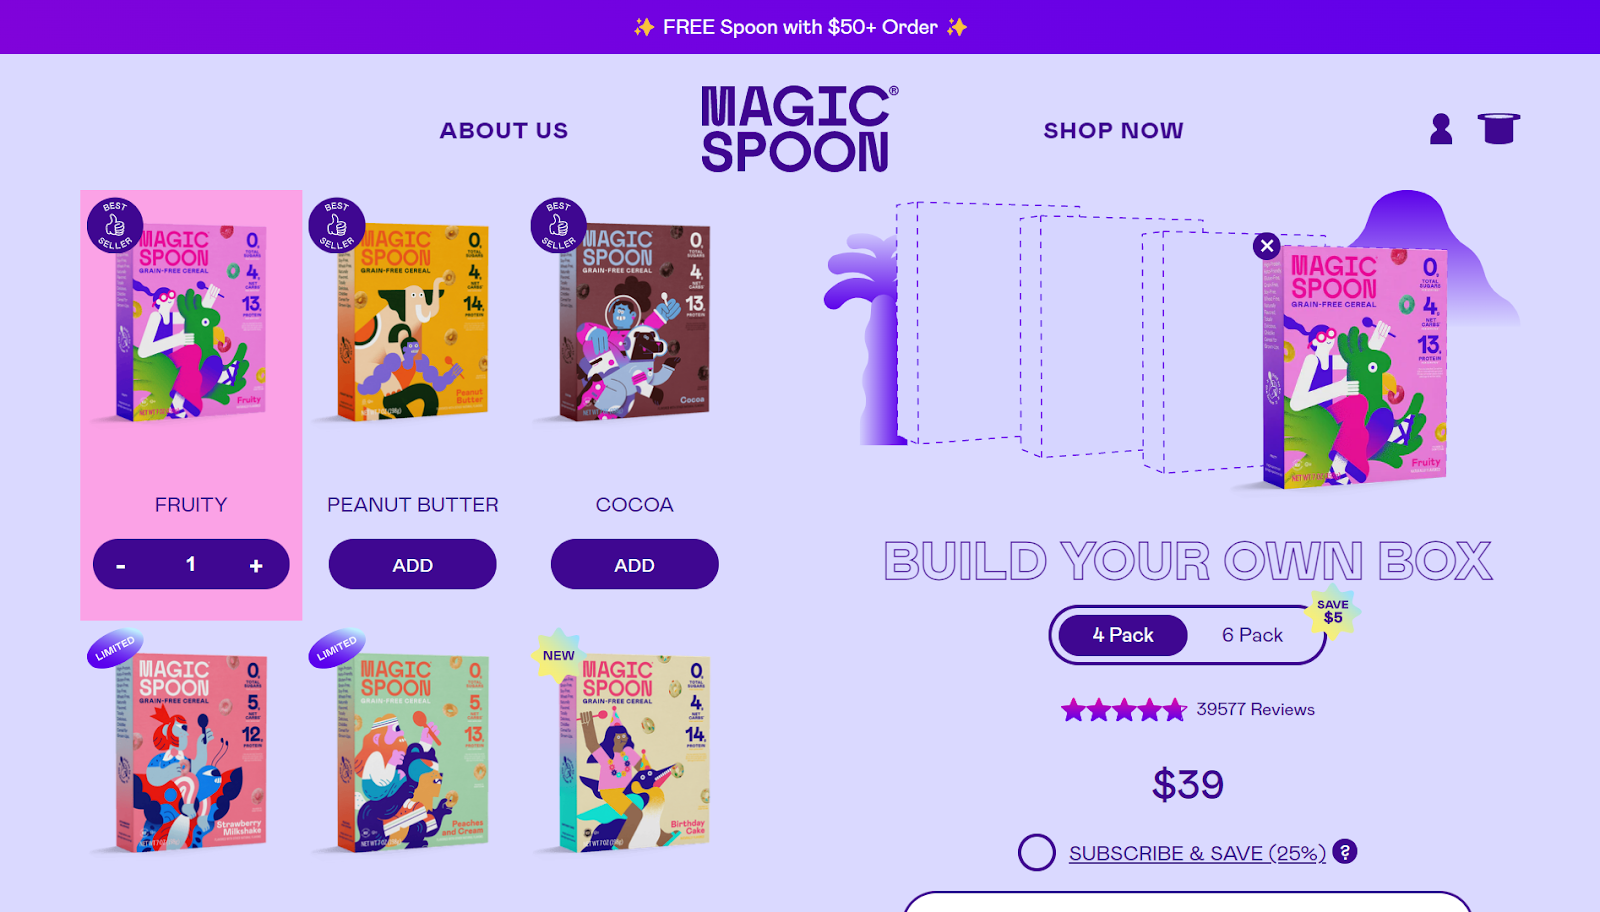 Magic Spoon’s website